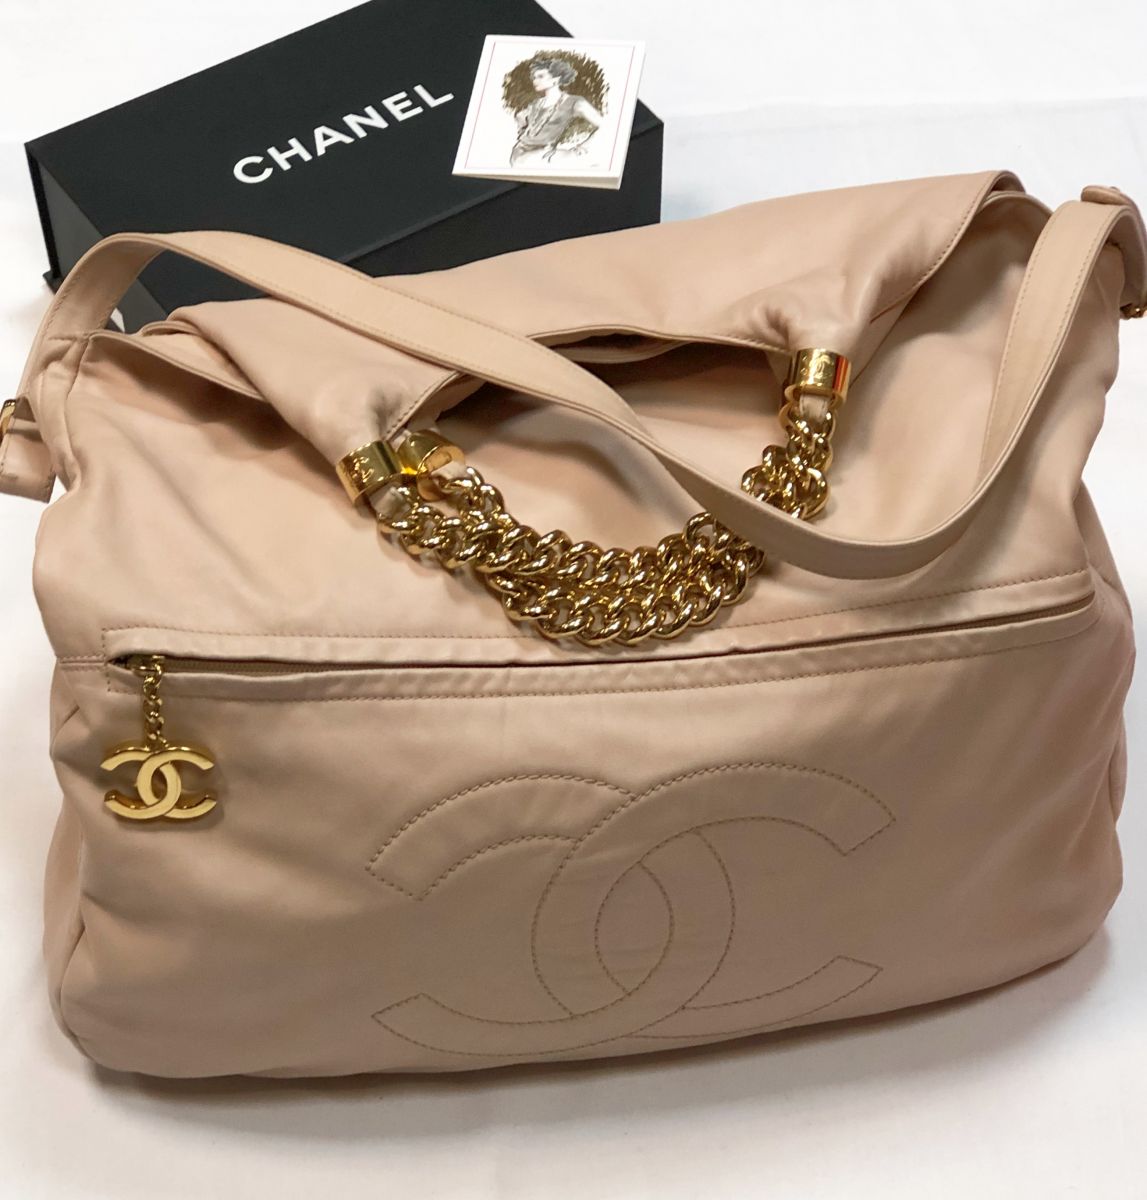 Сумка Chanel размер большой цена 76 925 руб